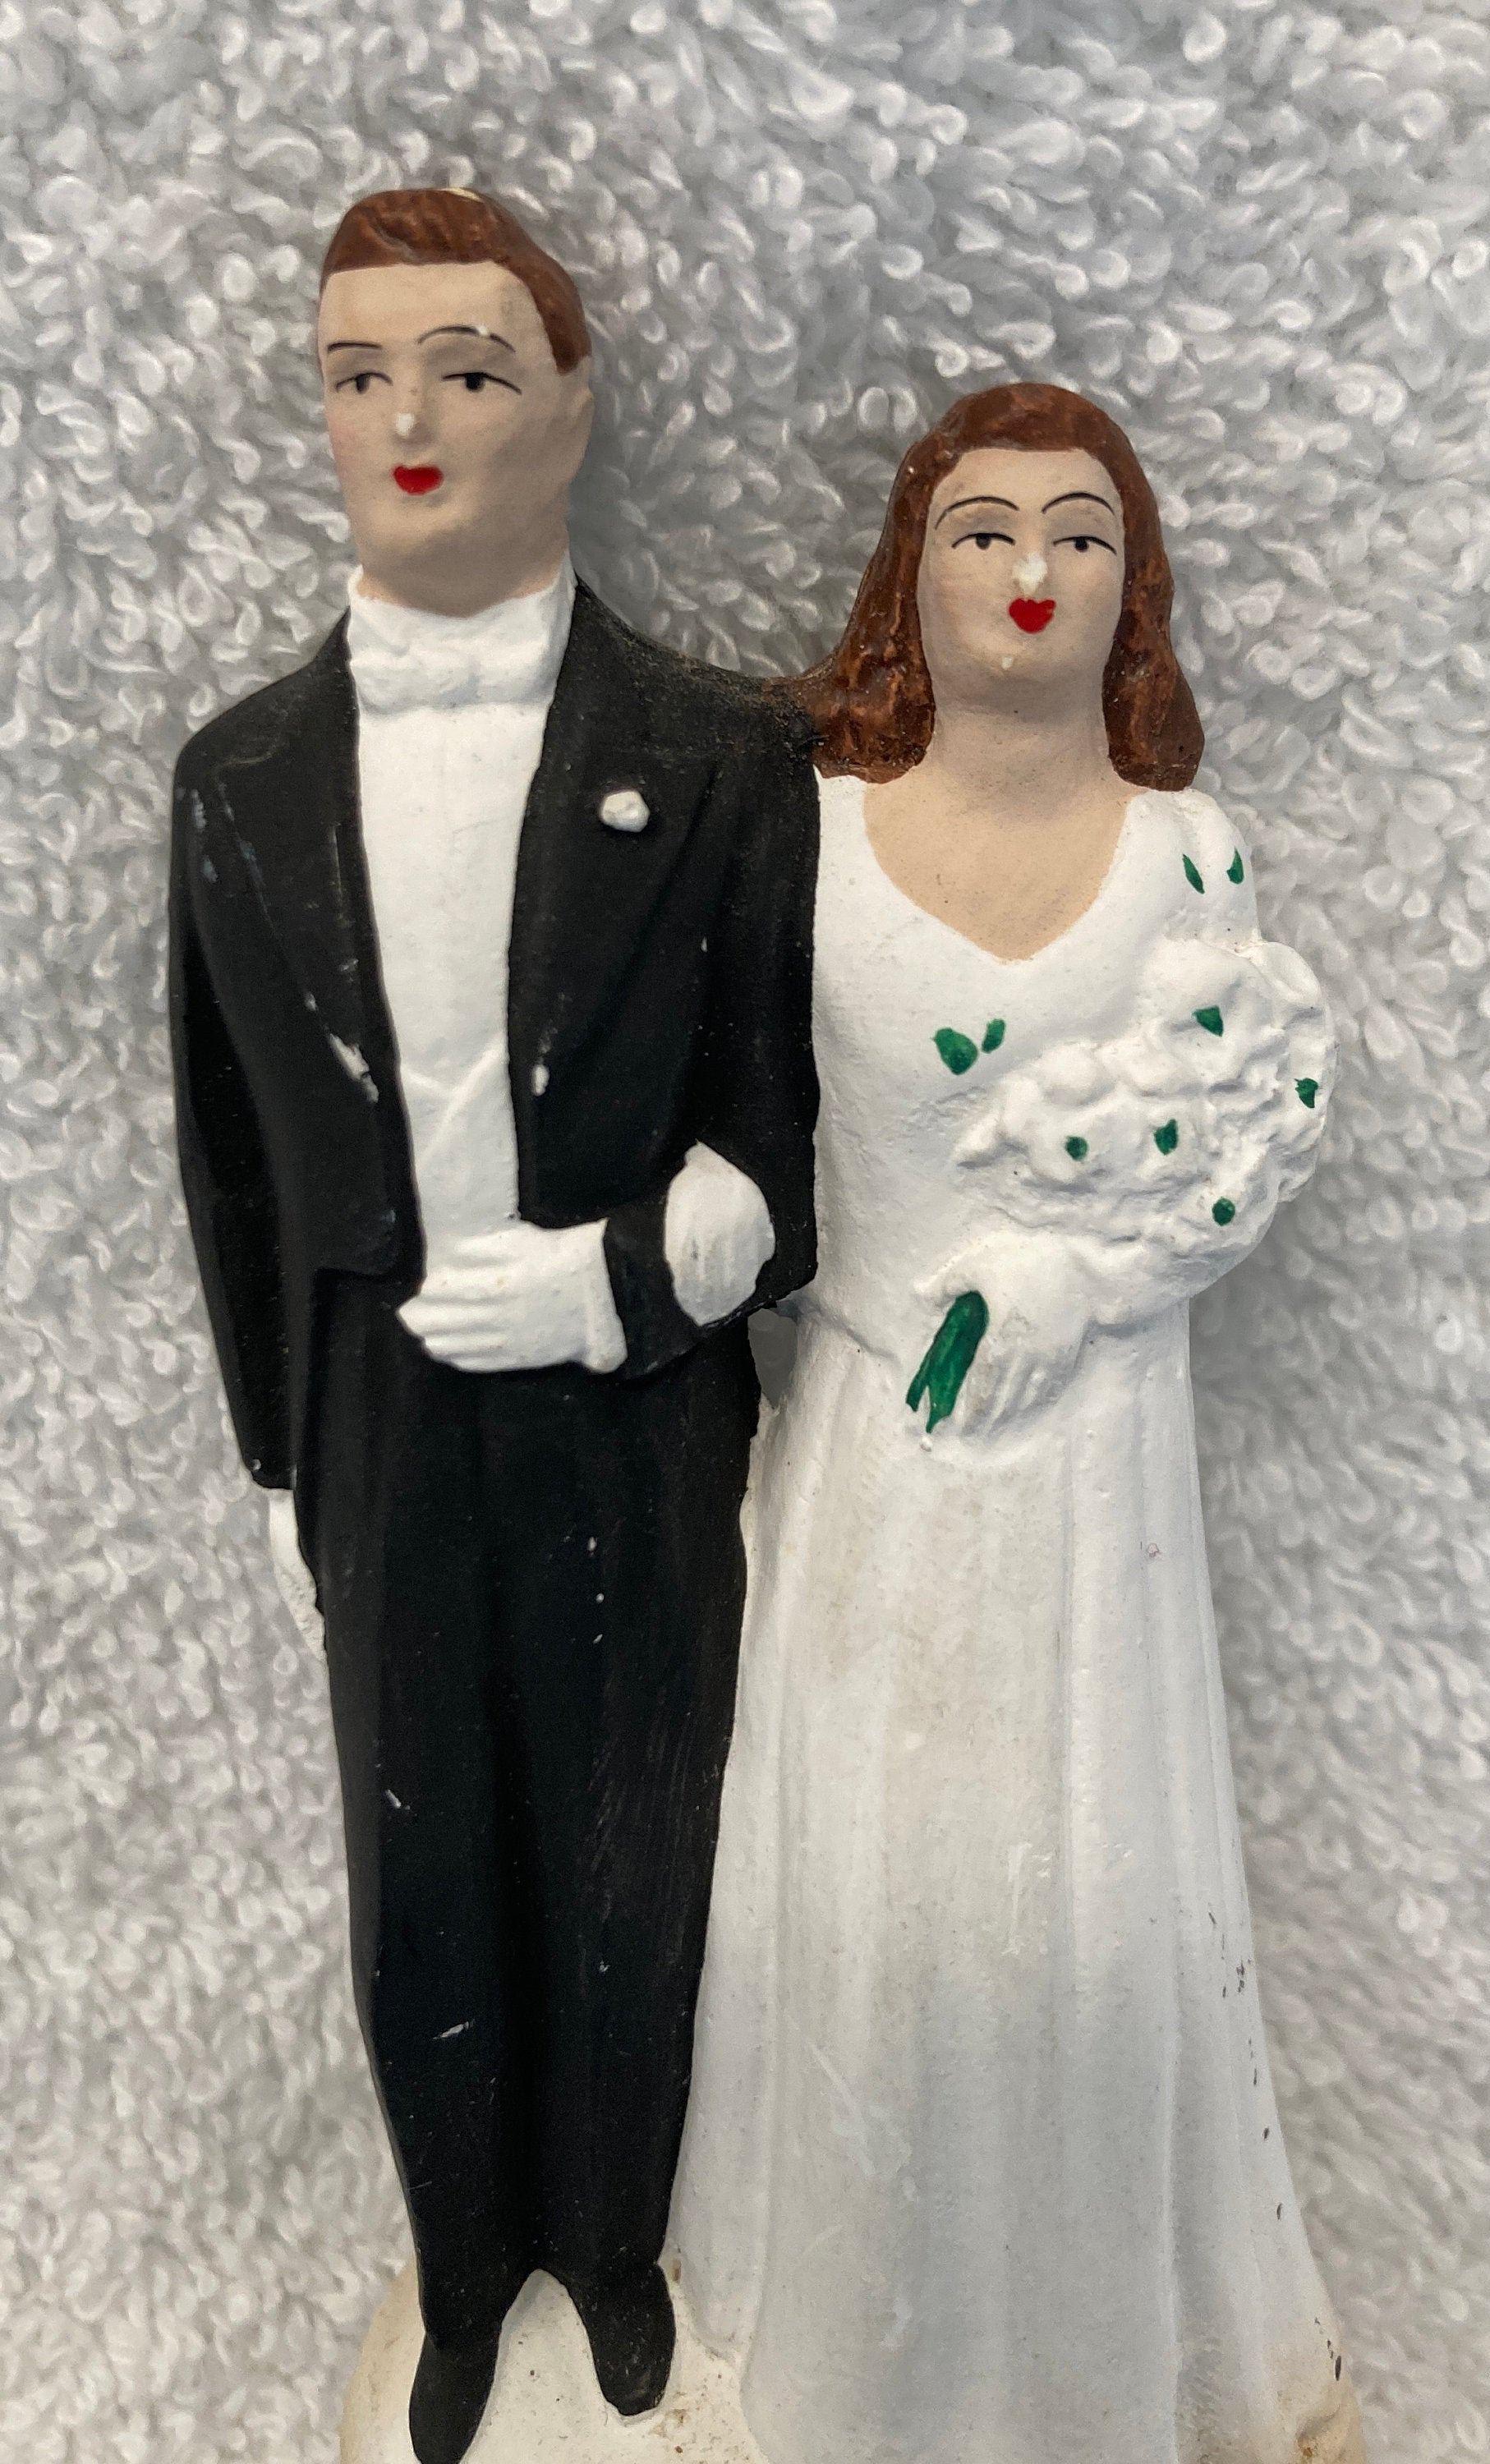 Bride + Groom 1948 chalk ware wedding cake topper from our collection.   Vintage wedding cake topper, Wedding cake toppers, Wedding cakes vintage